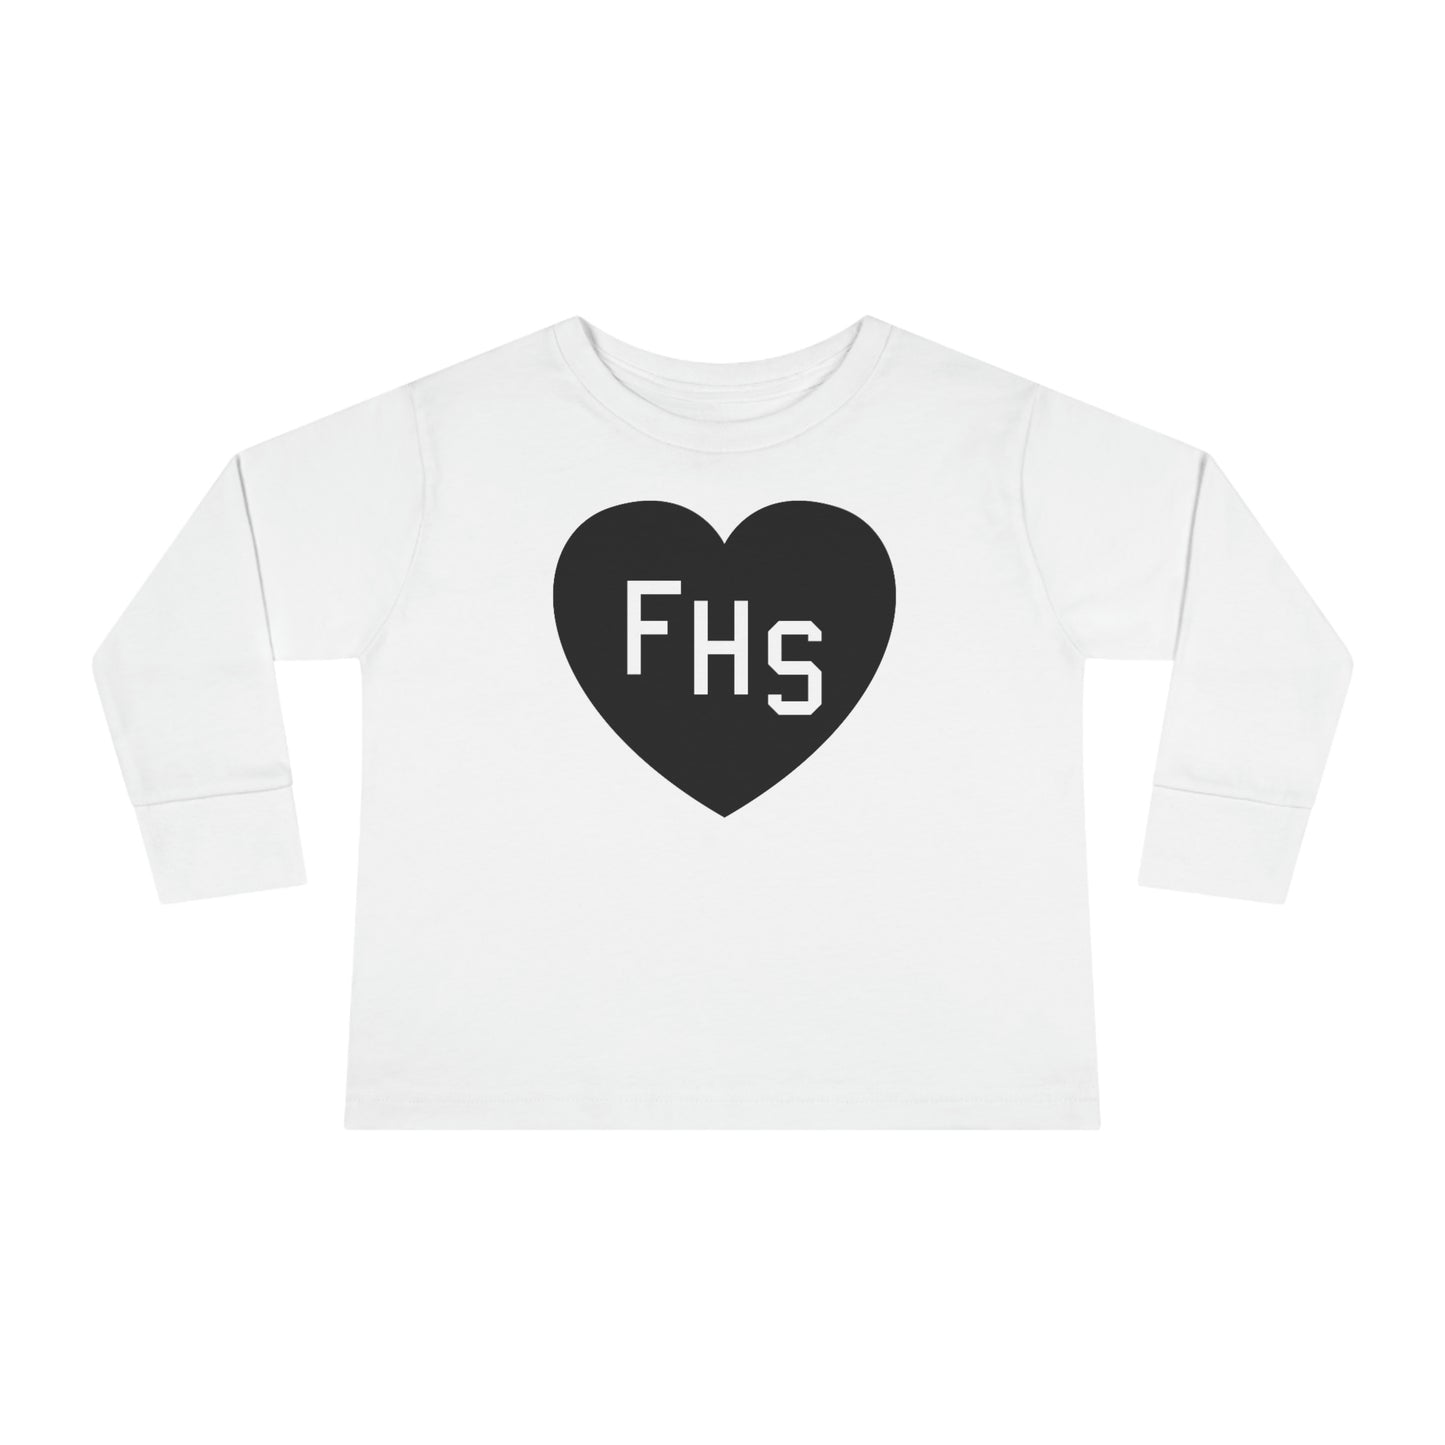 FHS Heart Long Sleeve Toddler Tee